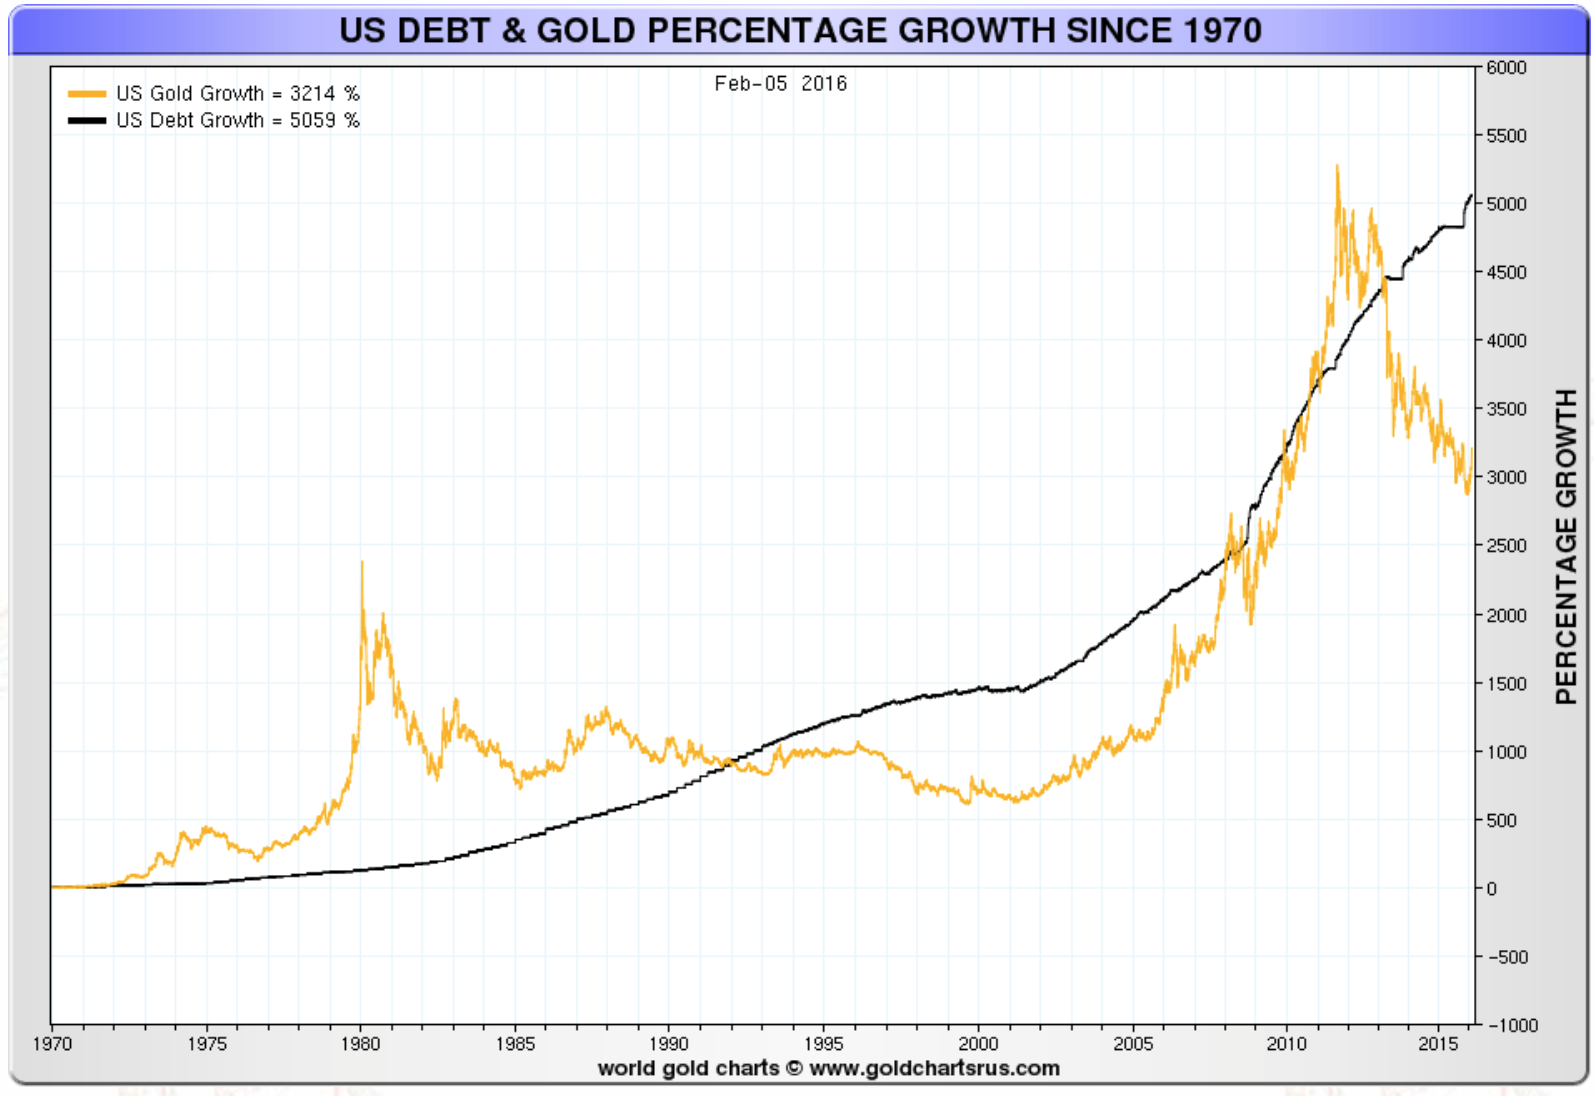 US Debt & Gold Percentage Growth since 1970